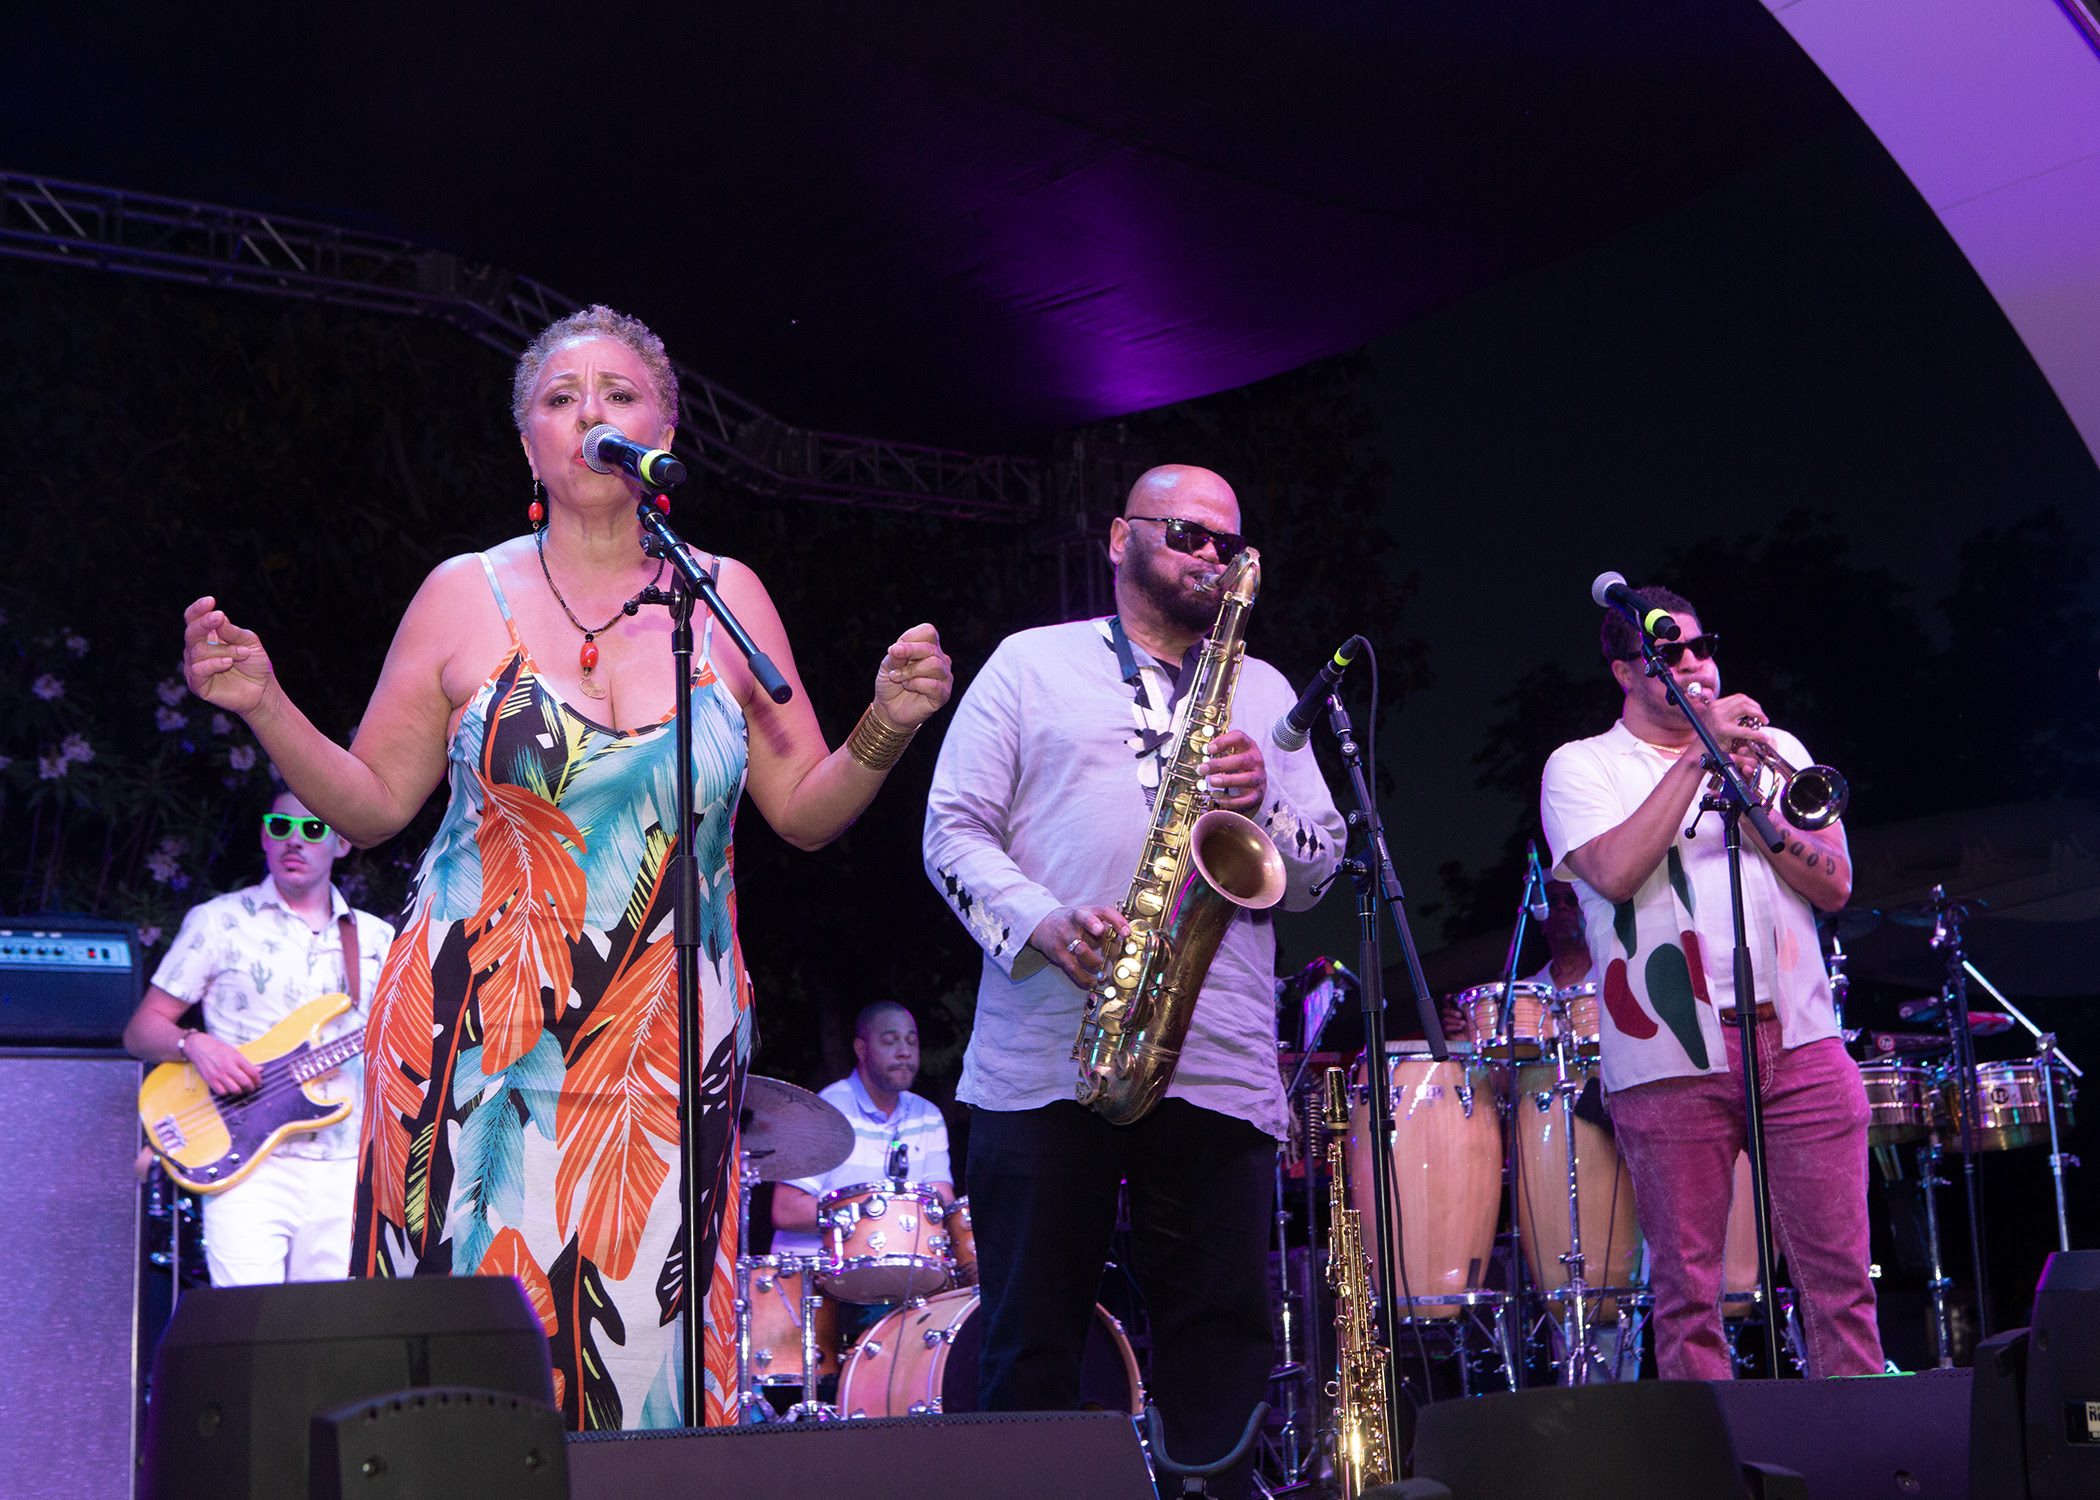  Scottsdale Jazz Festival Returns with Top Jazz & Blues Artists 